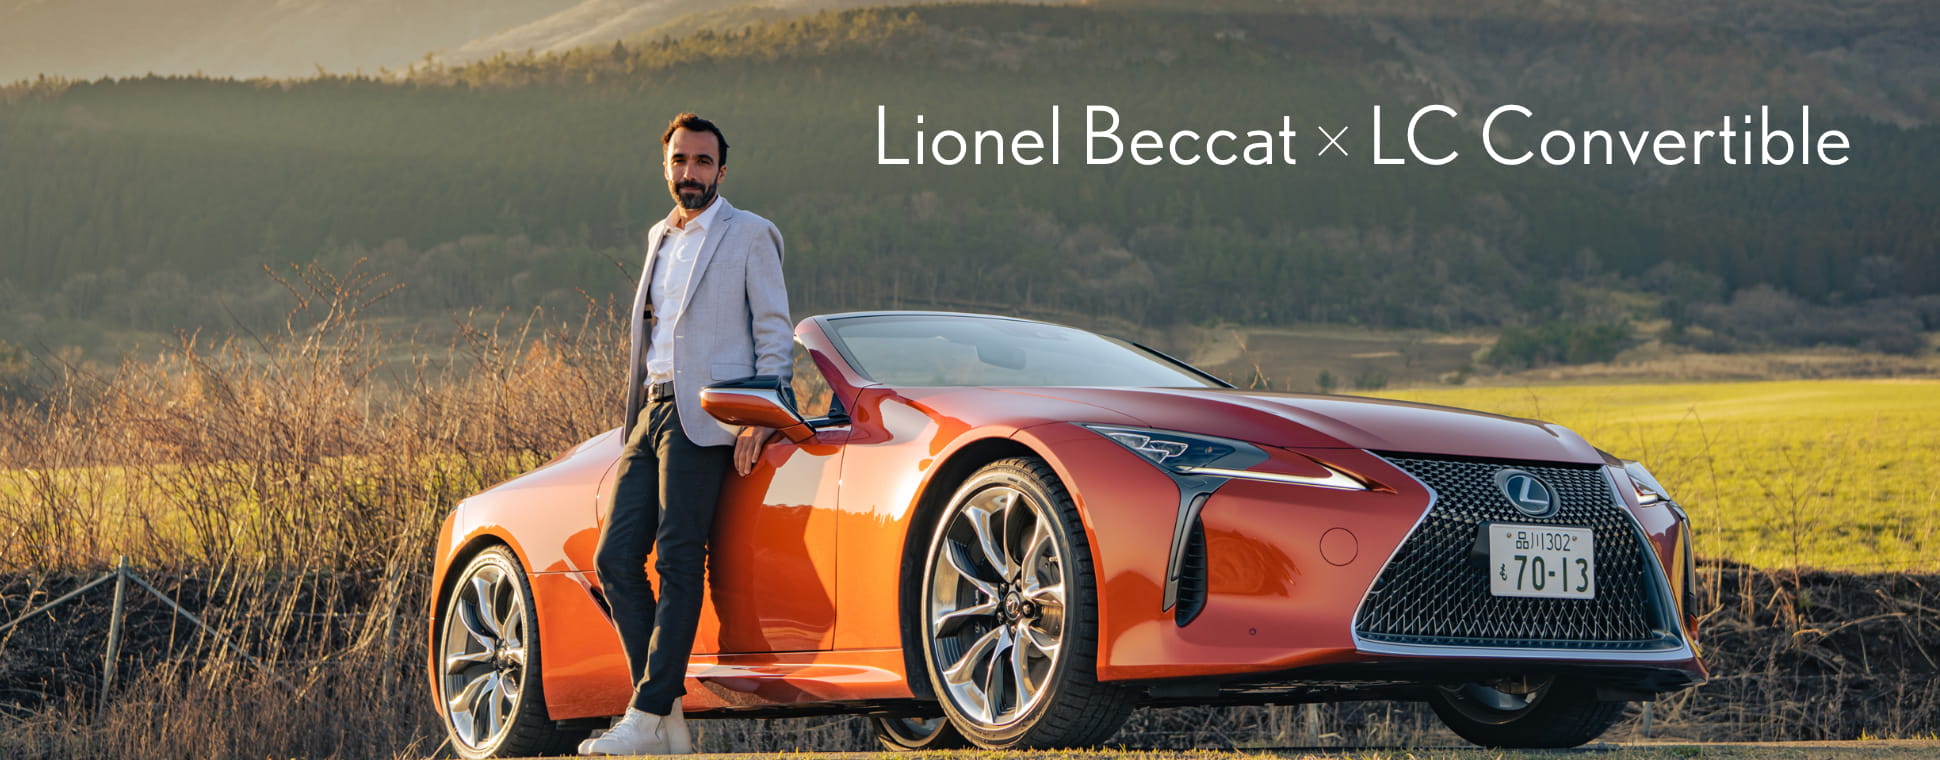 Lionel Beccat x LC Convertible